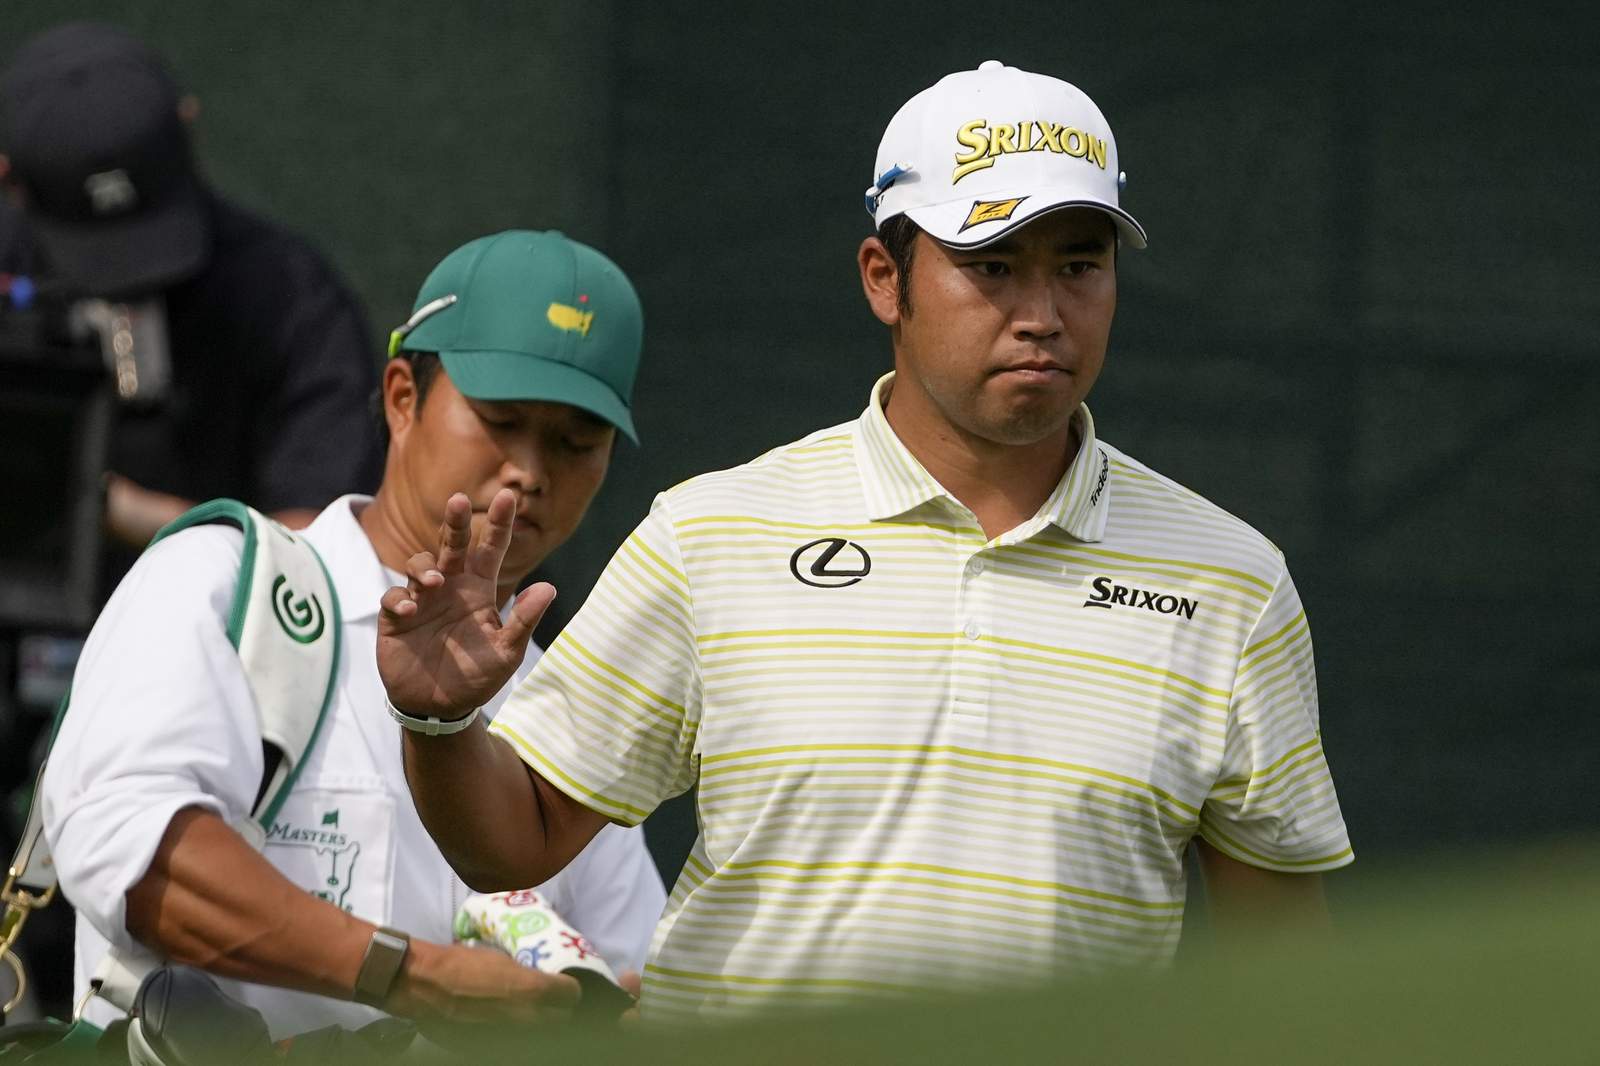 The Latest: Matsuyama 1st man from Japan to win golf major